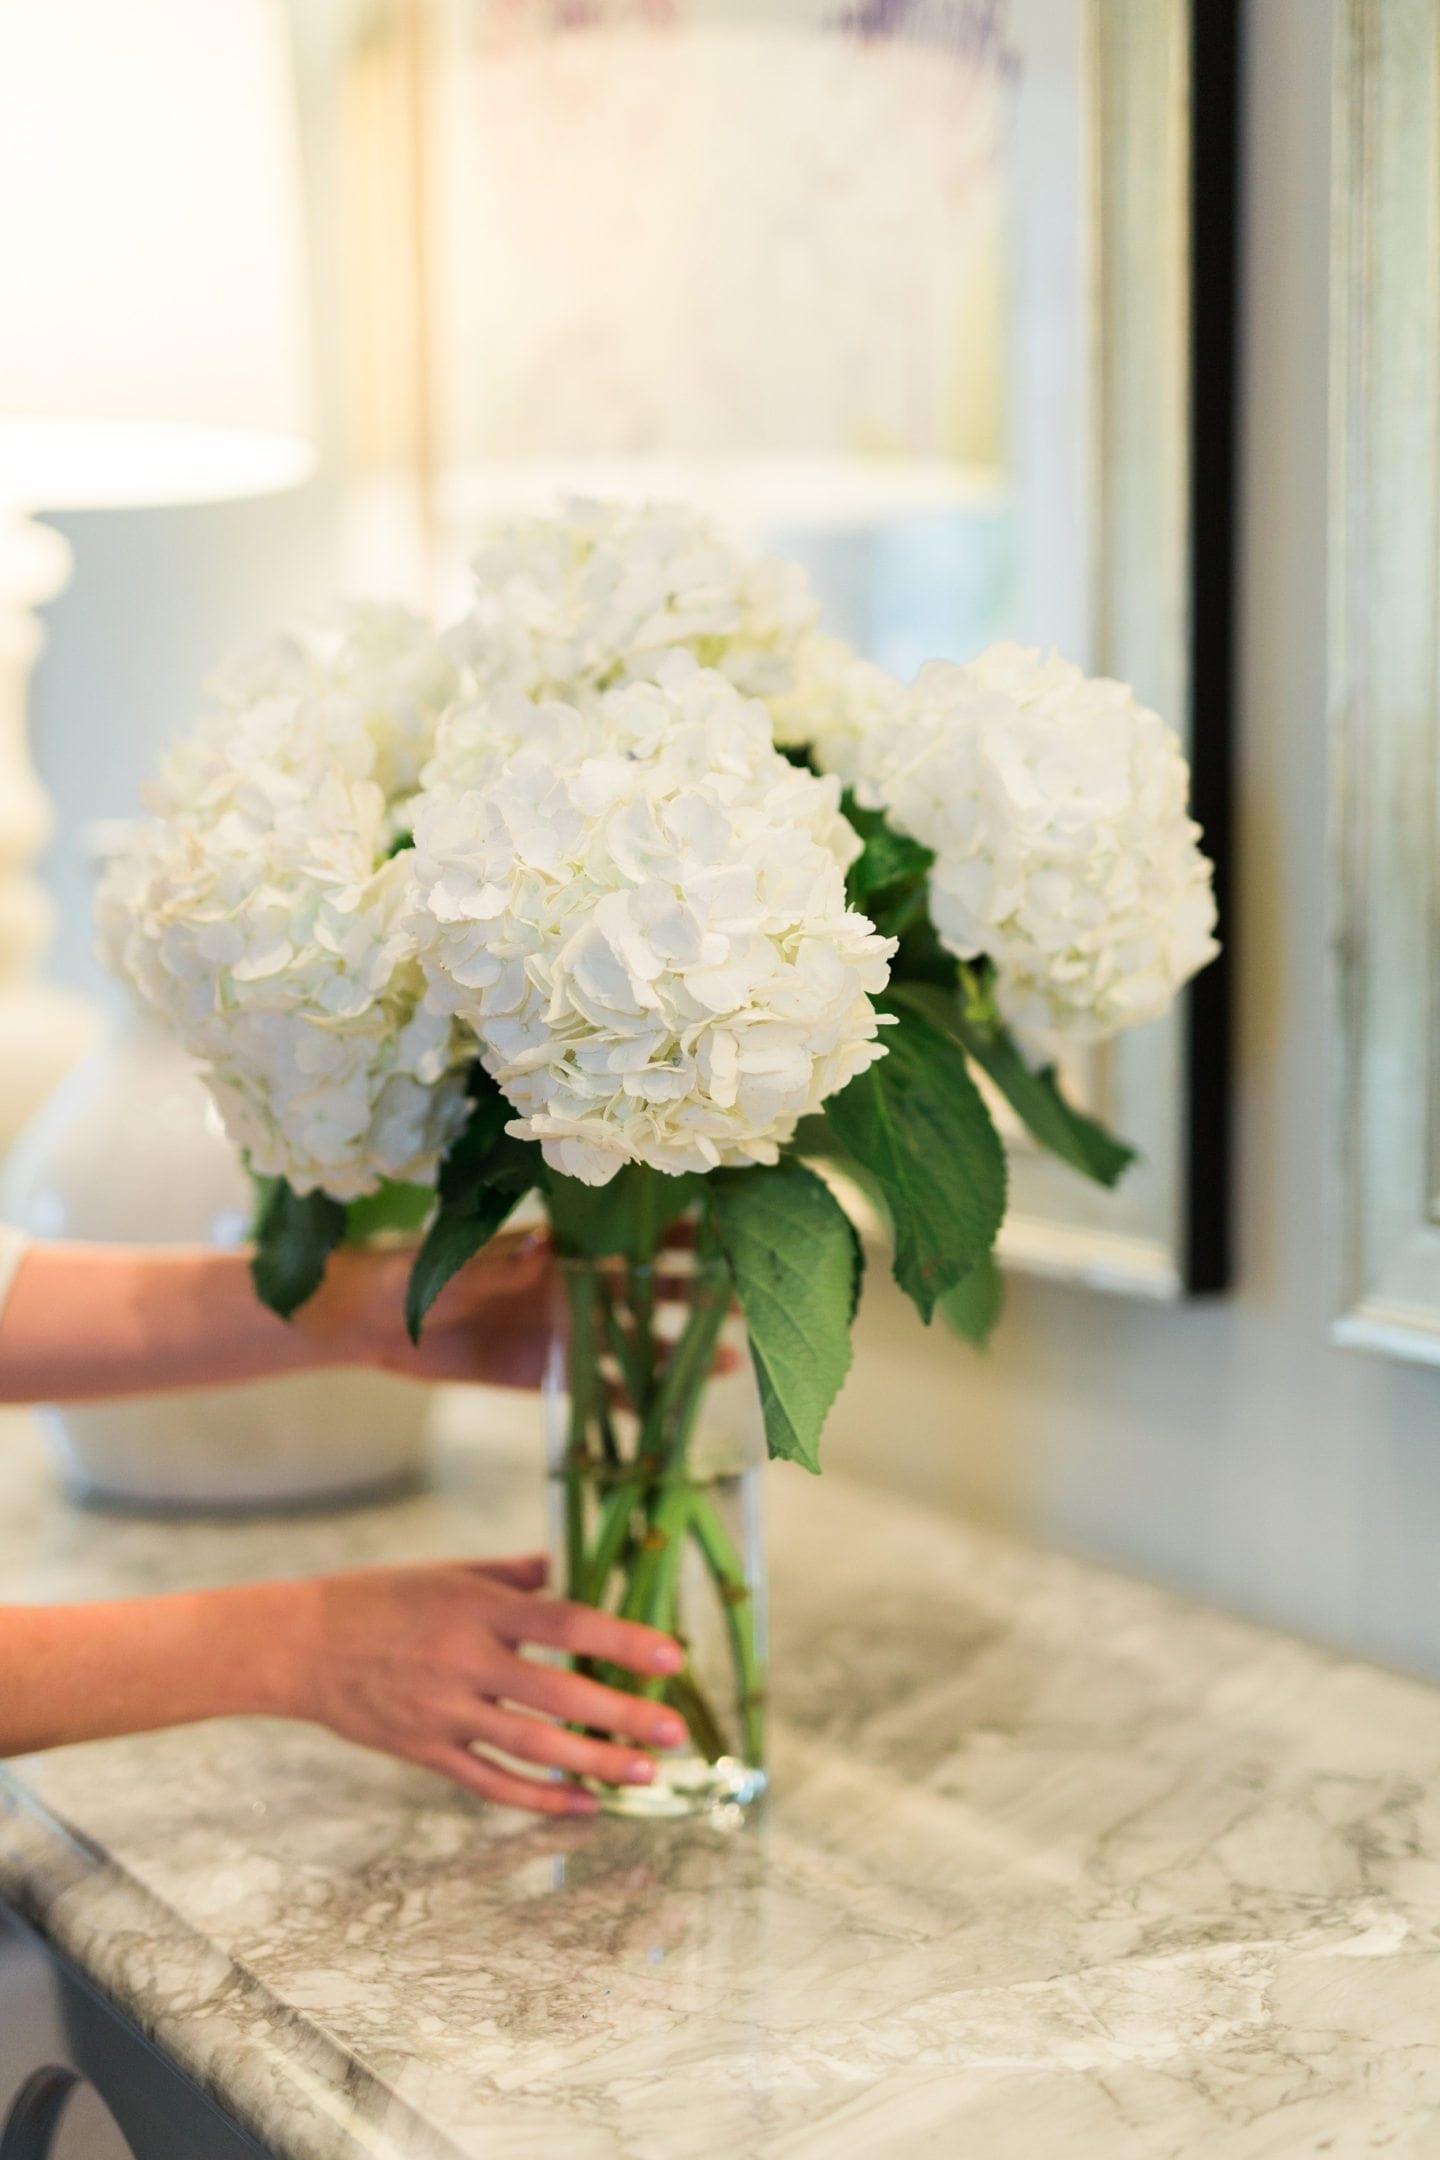 How to keep flower arrangements alive longer. White hydrangea flower in a clear vase.